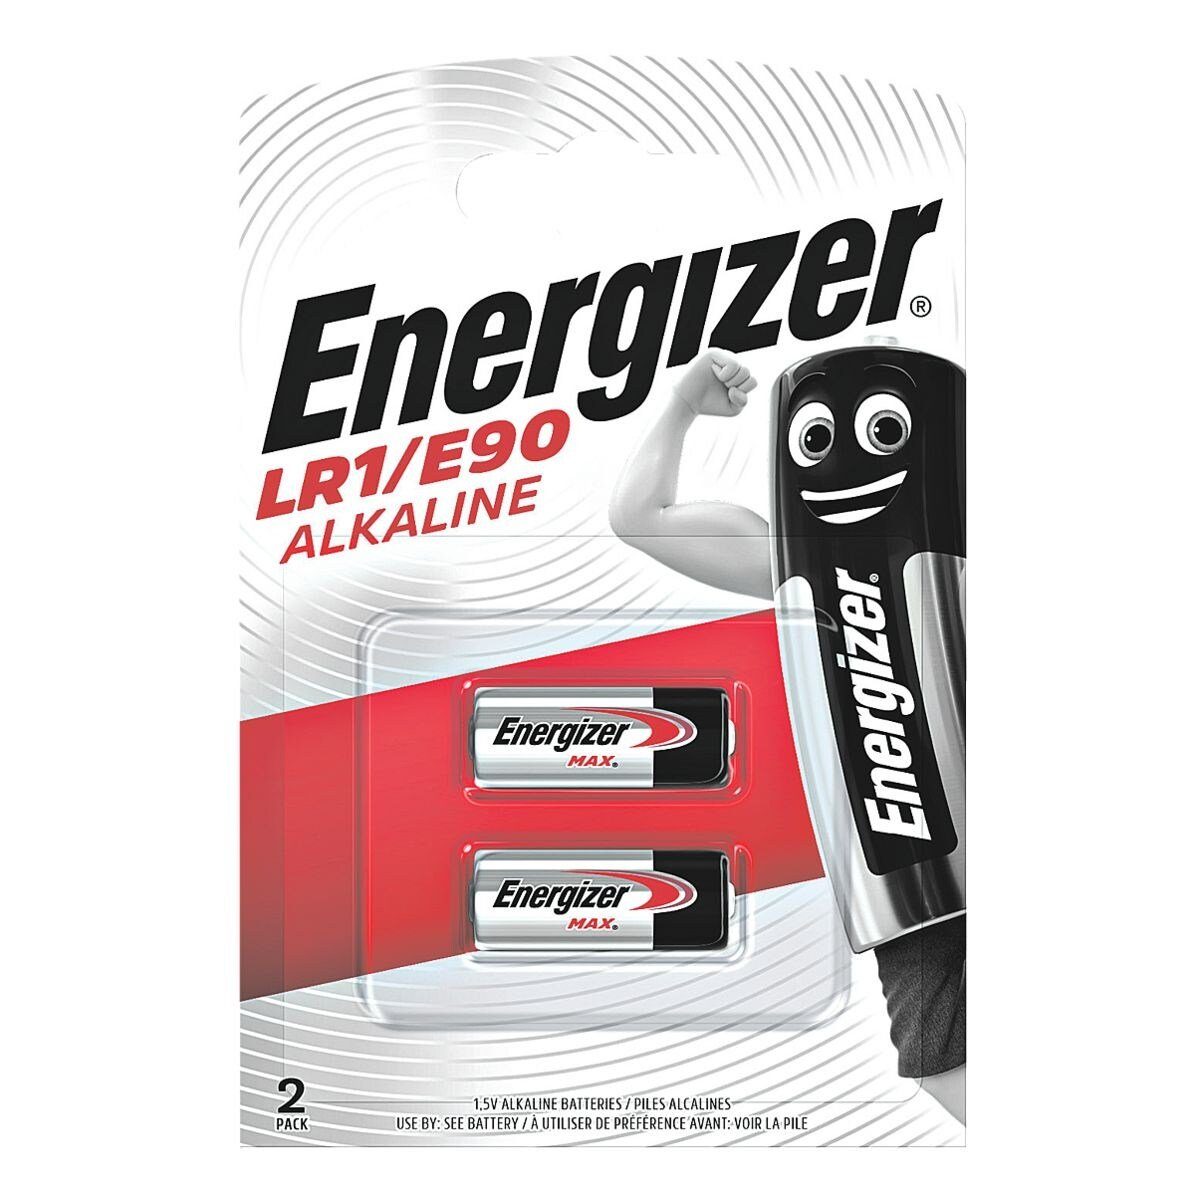 Energizer Spezial Alkali Batterie, (1.5 V, 2 St), Lady / LR1 / E90, 1,5 V, Alkali